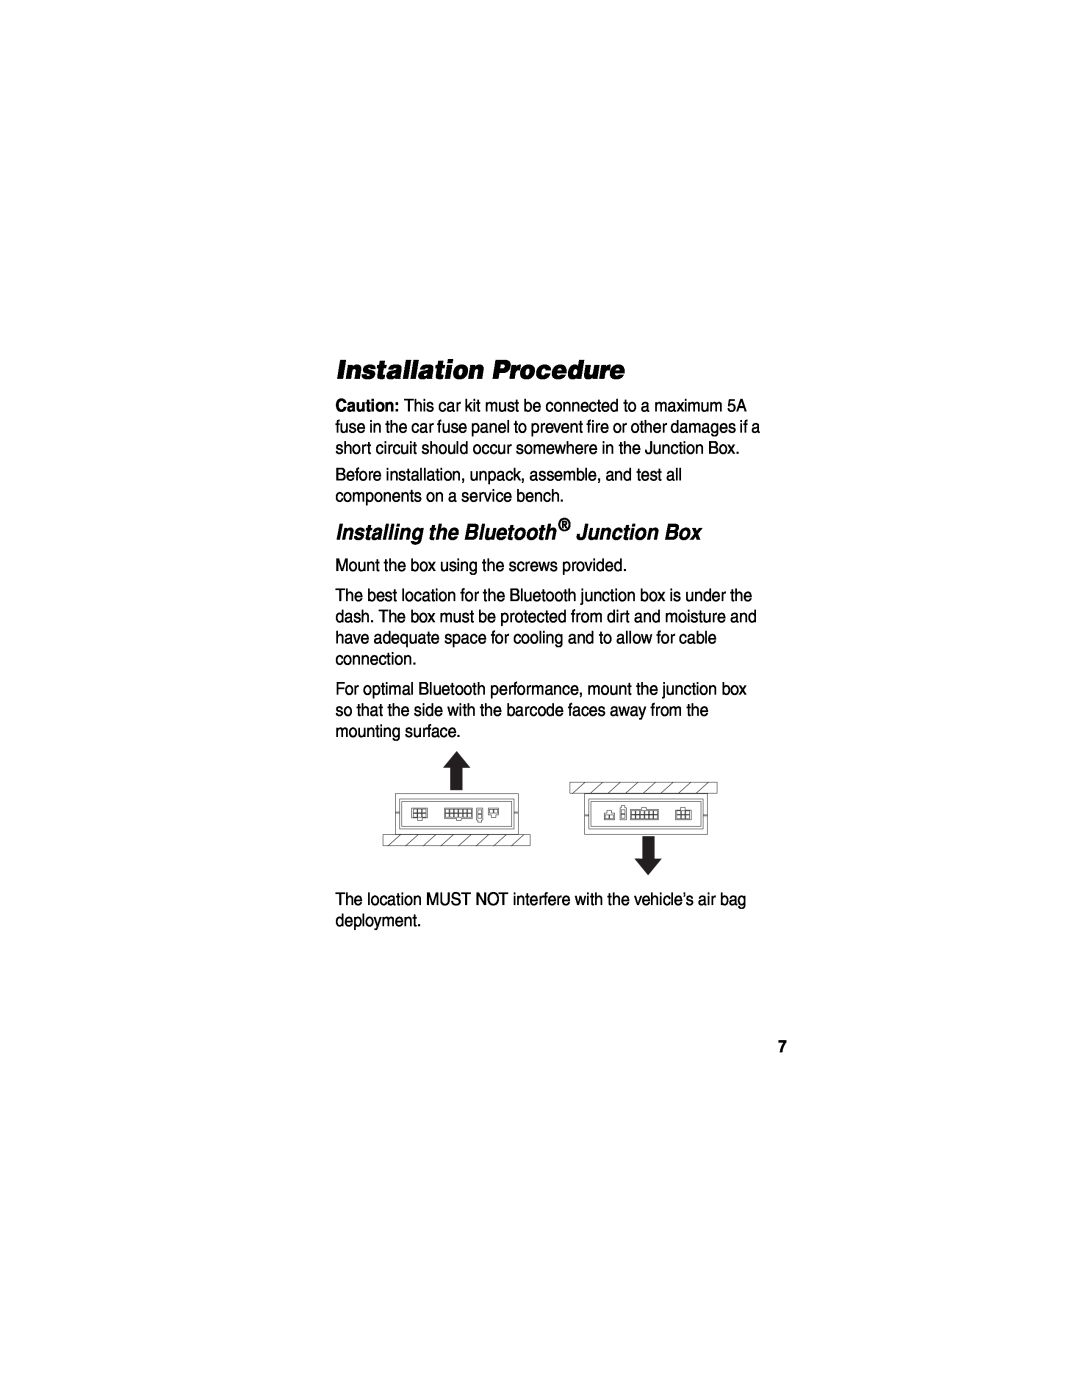 Motorola HF850 manual Installation Procedure, Installing the Bluetooth Junction Box 